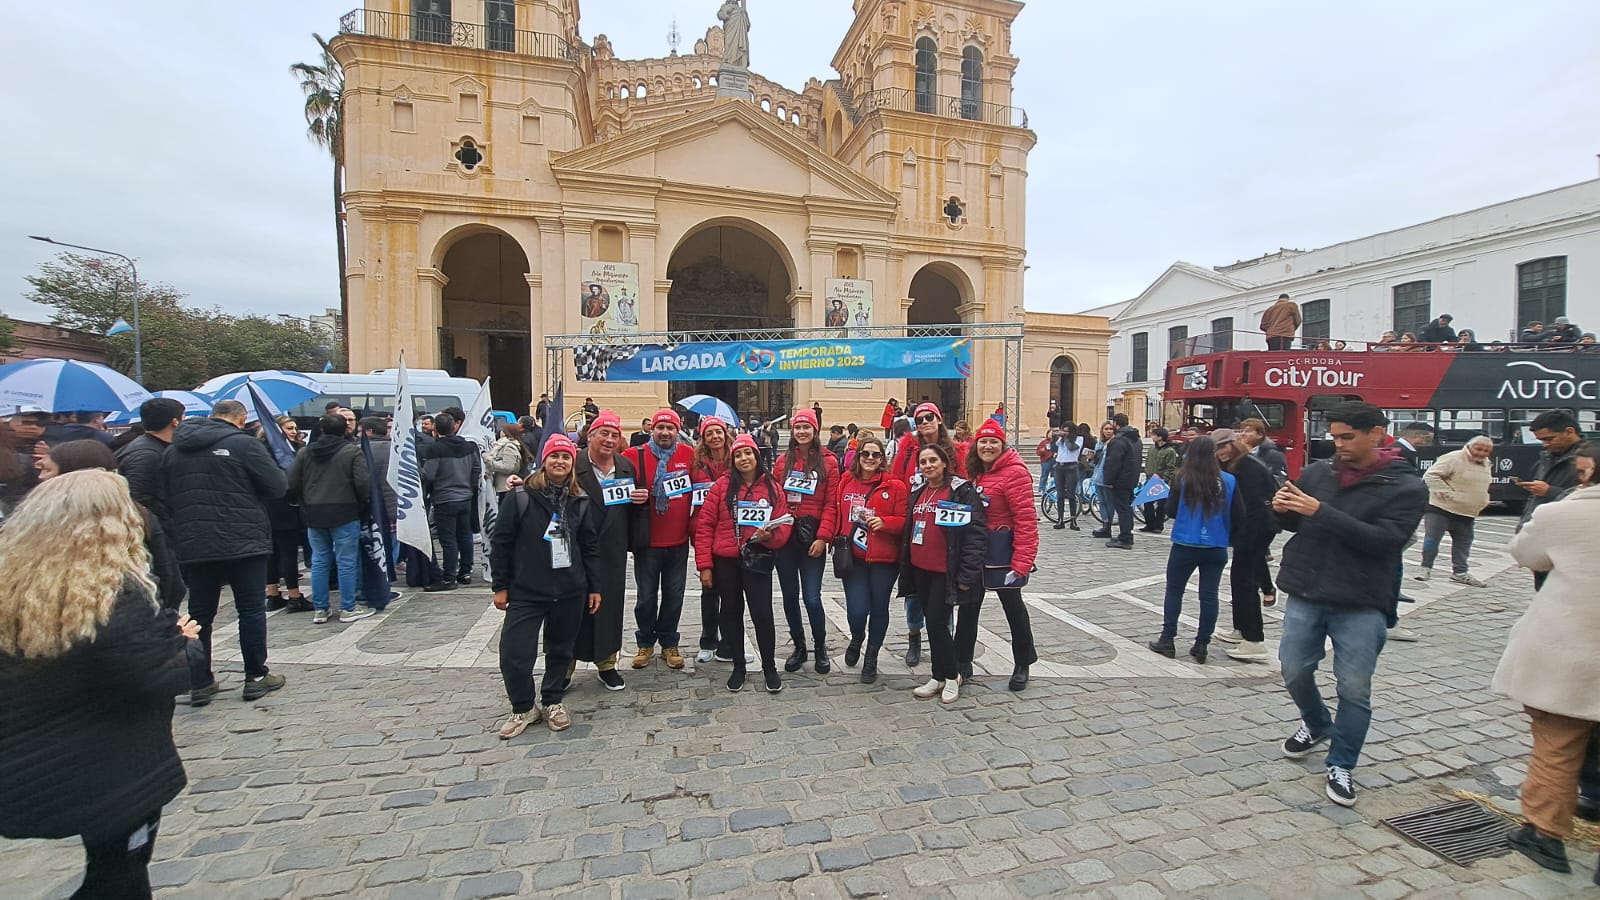 Turismo cordobés: así es viajar en el Córdoba City Tour • Canal C